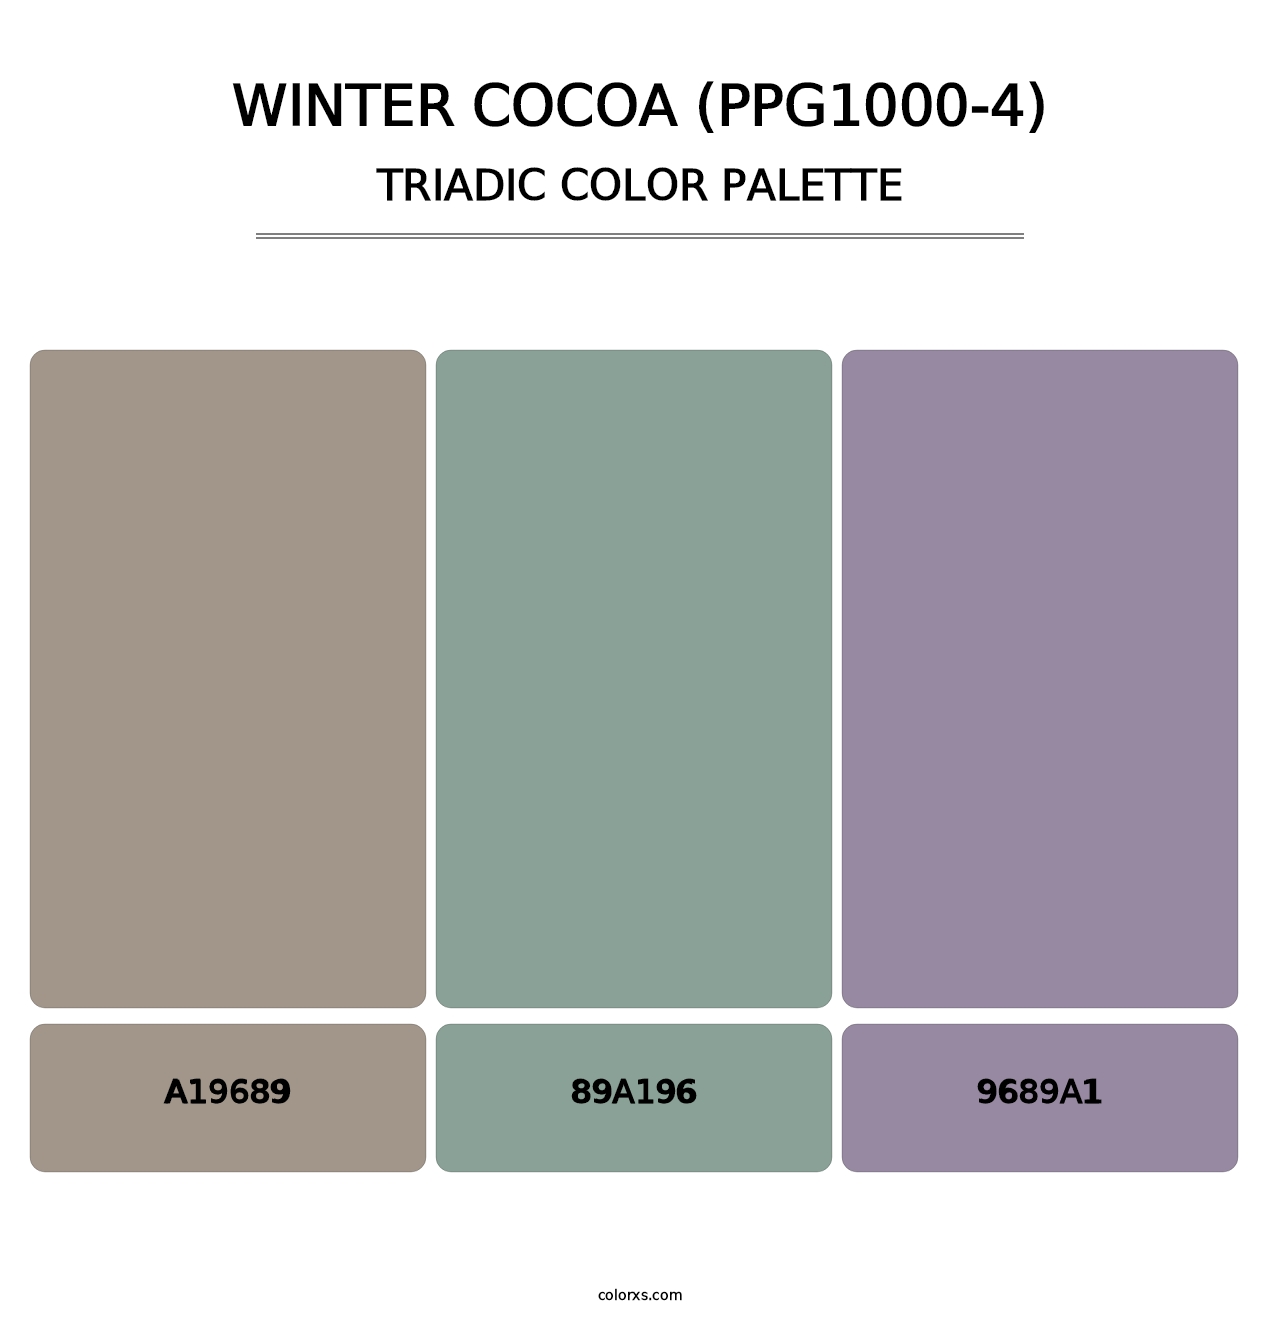 Winter Cocoa (PPG1000-4) - Triadic Color Palette